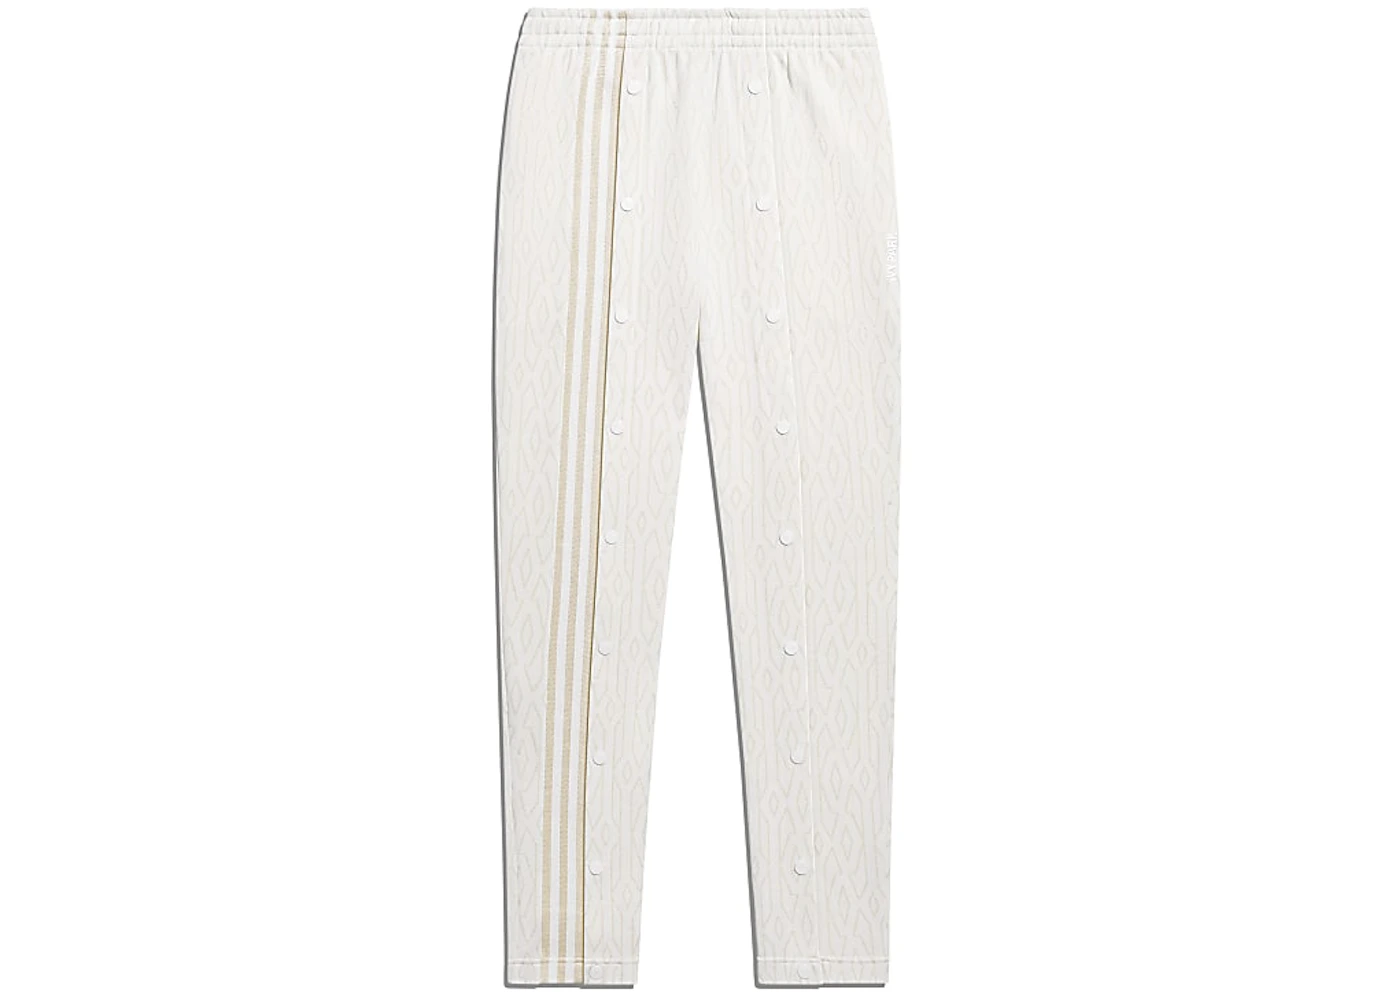 Ivy Park Mens Track Pants - White/White Size S